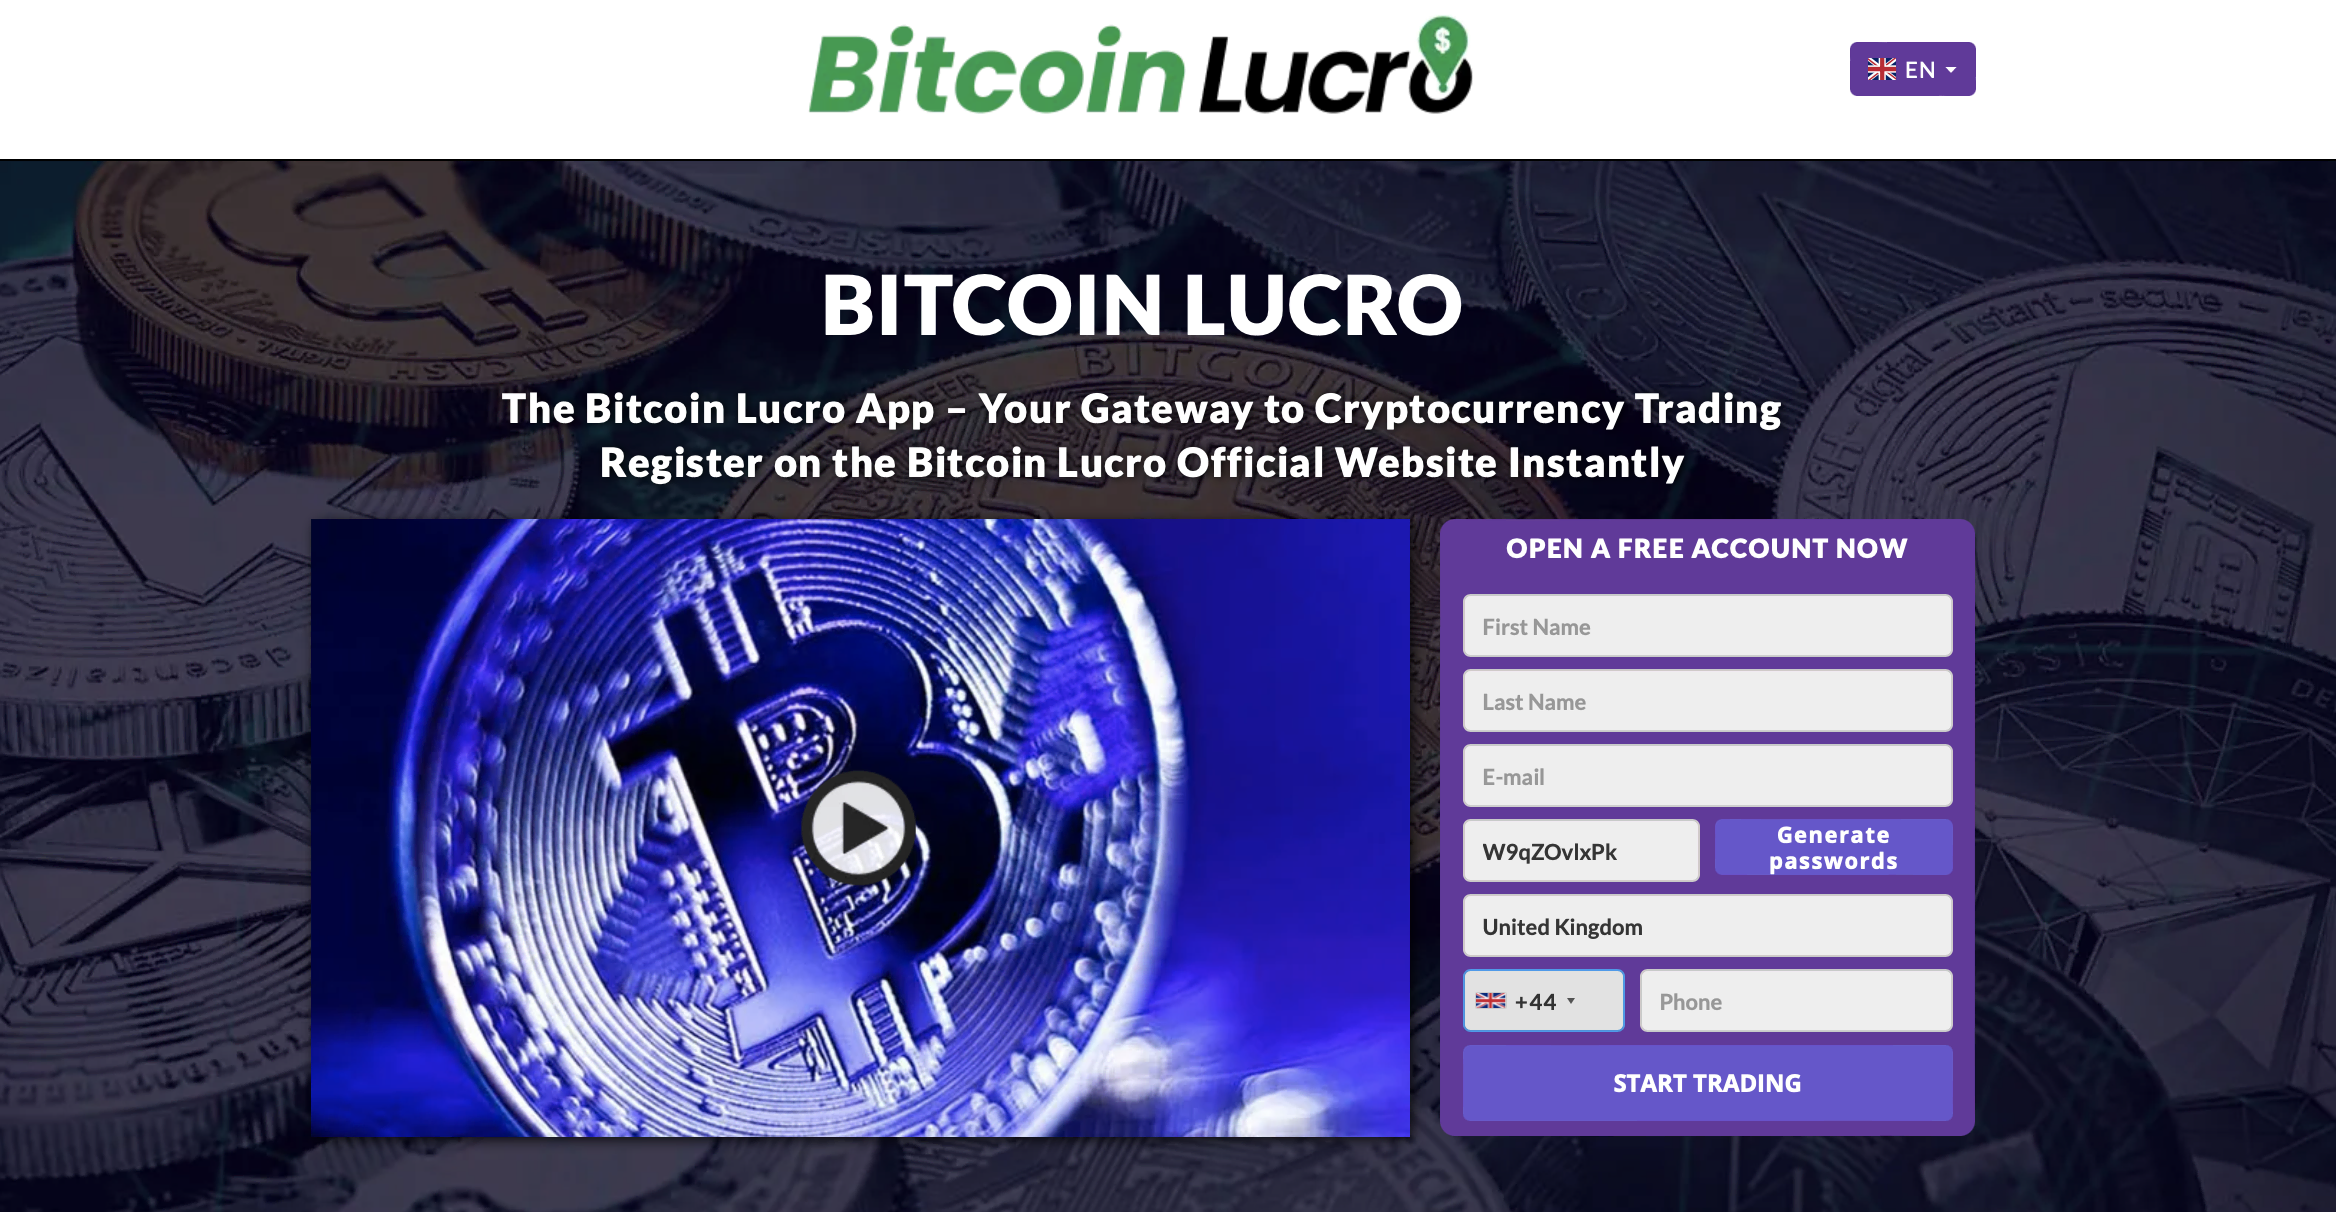 The official website of Bitcoin Lucro